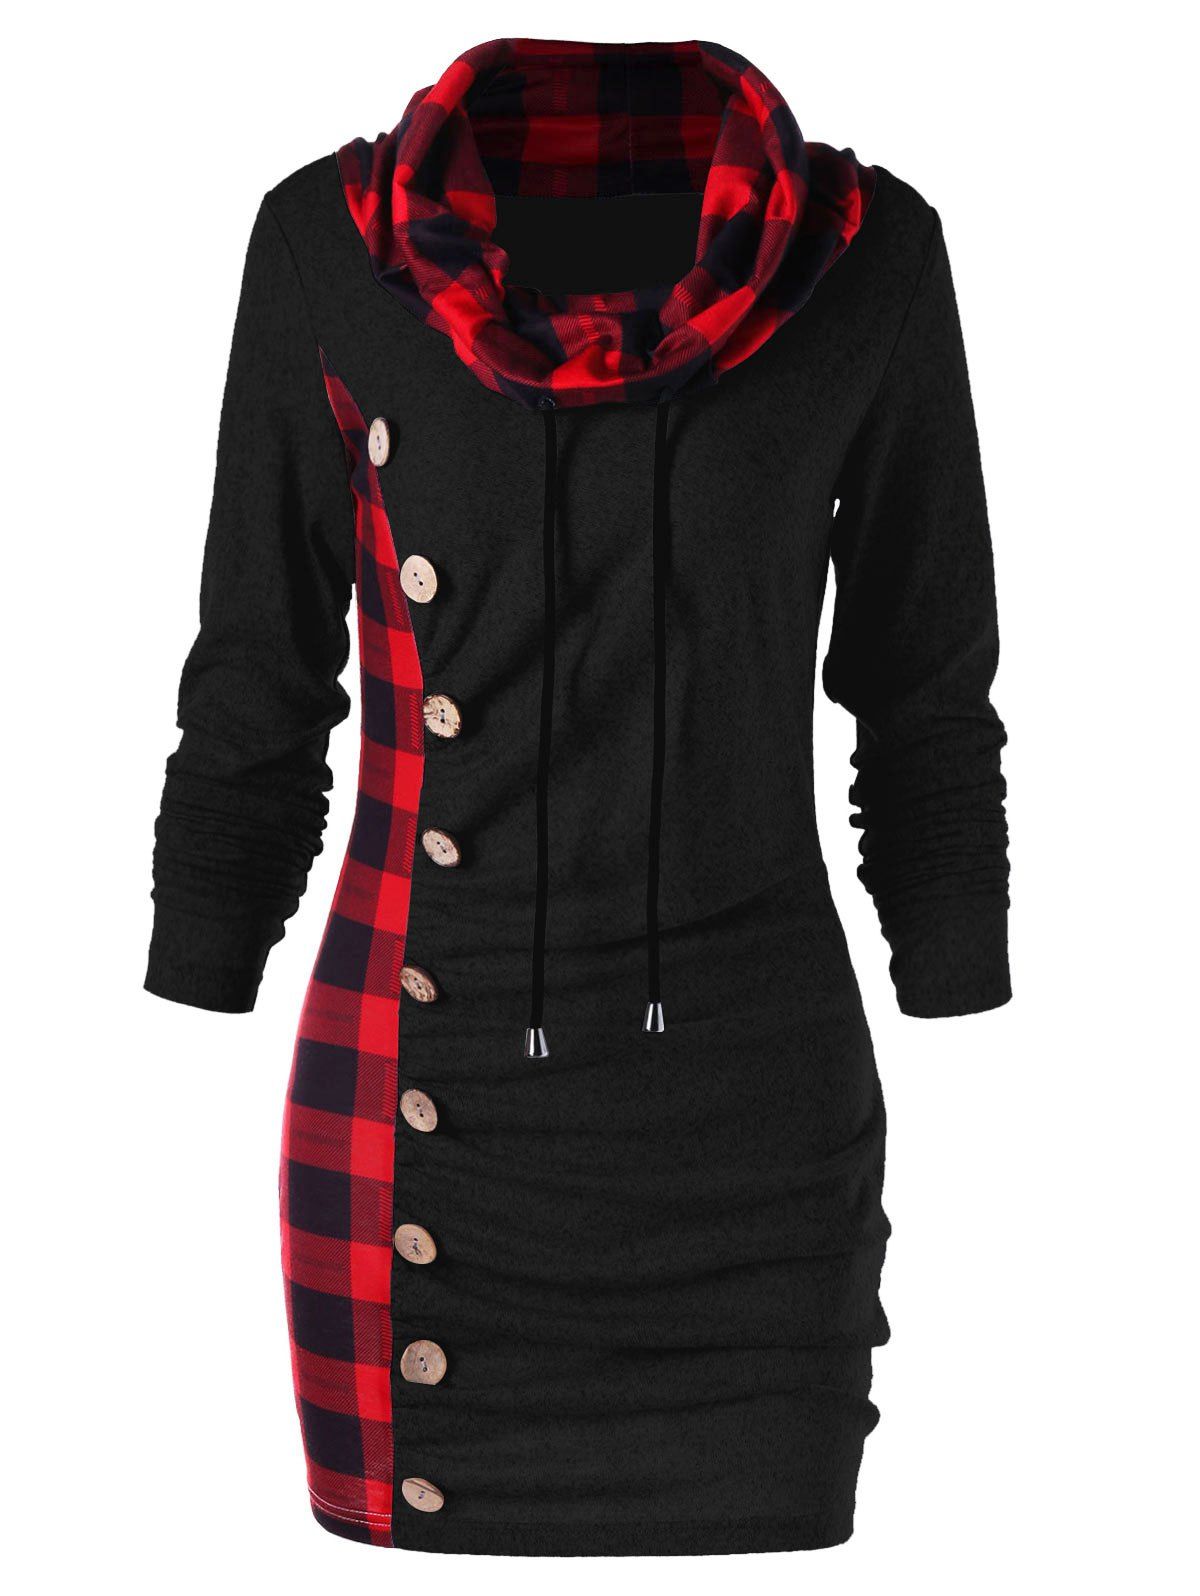 Plaid Drawstring Cowl Neck Tunic Sweatshirt Dress - RED/BLACK L